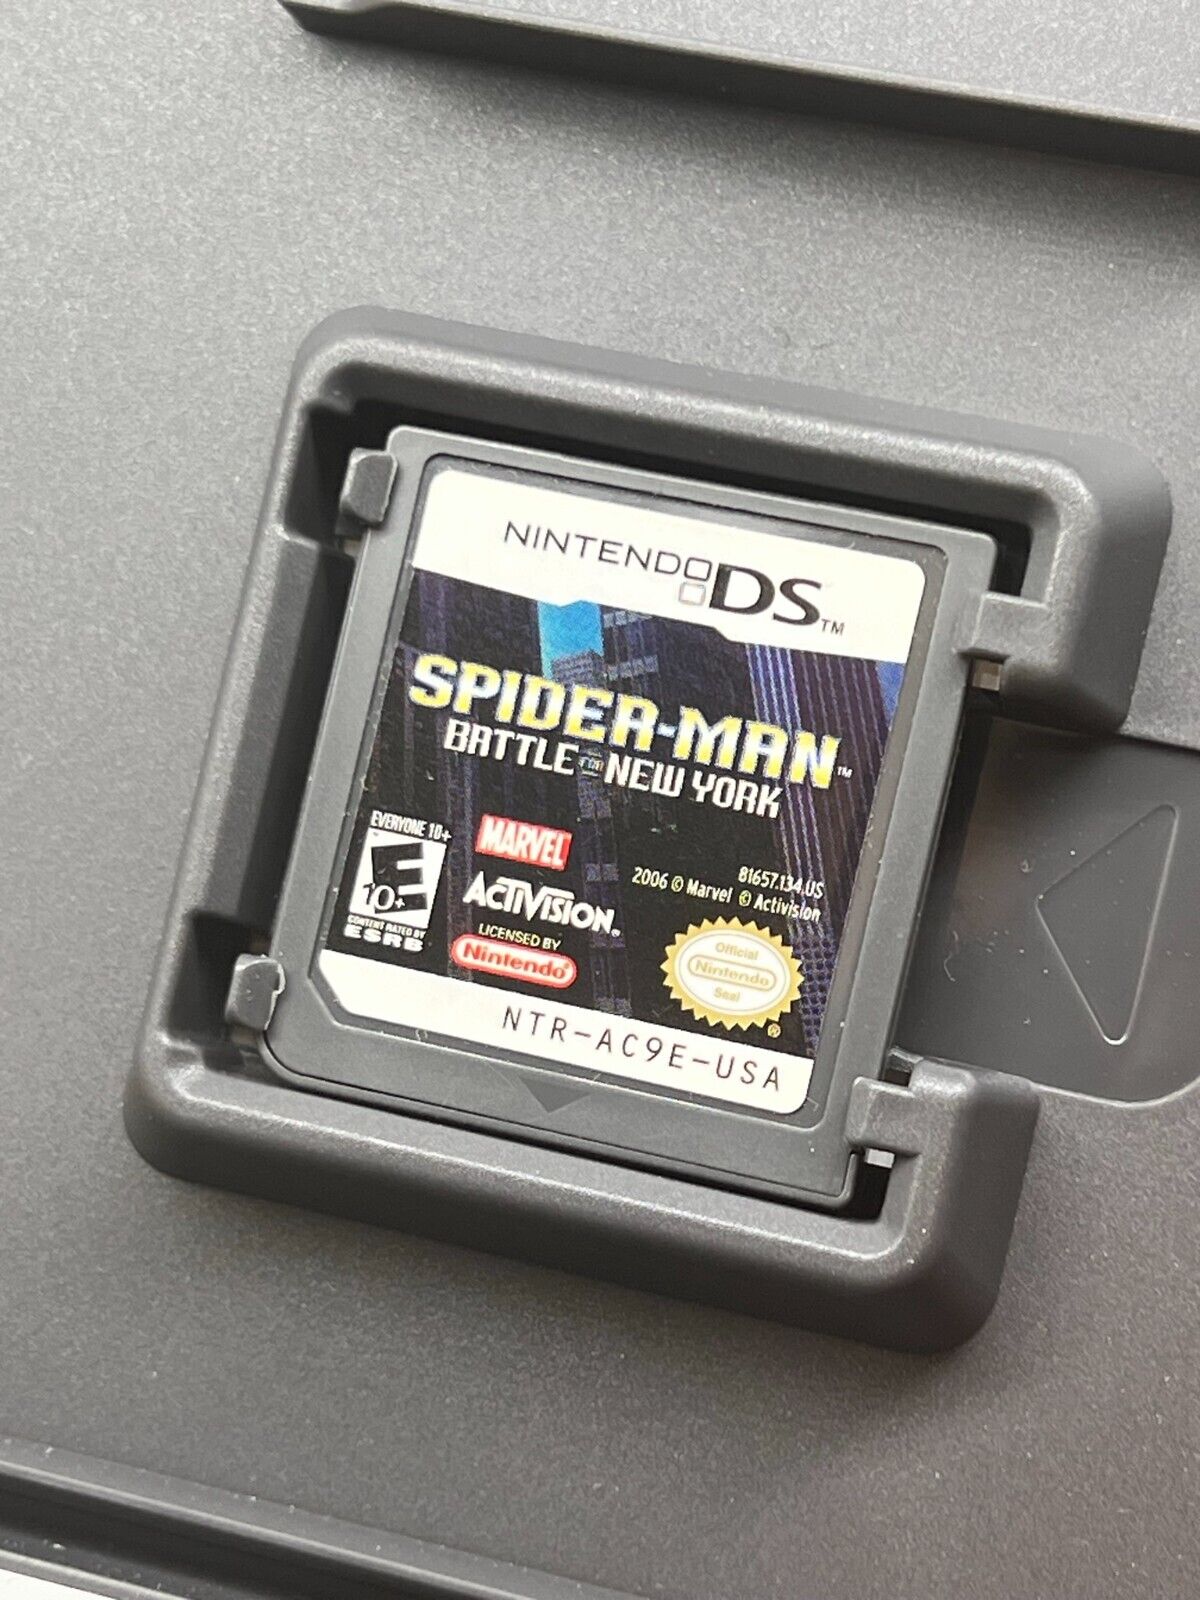 Spider-Man: Battle for New York (Nintendo DS, 2006) - Tested